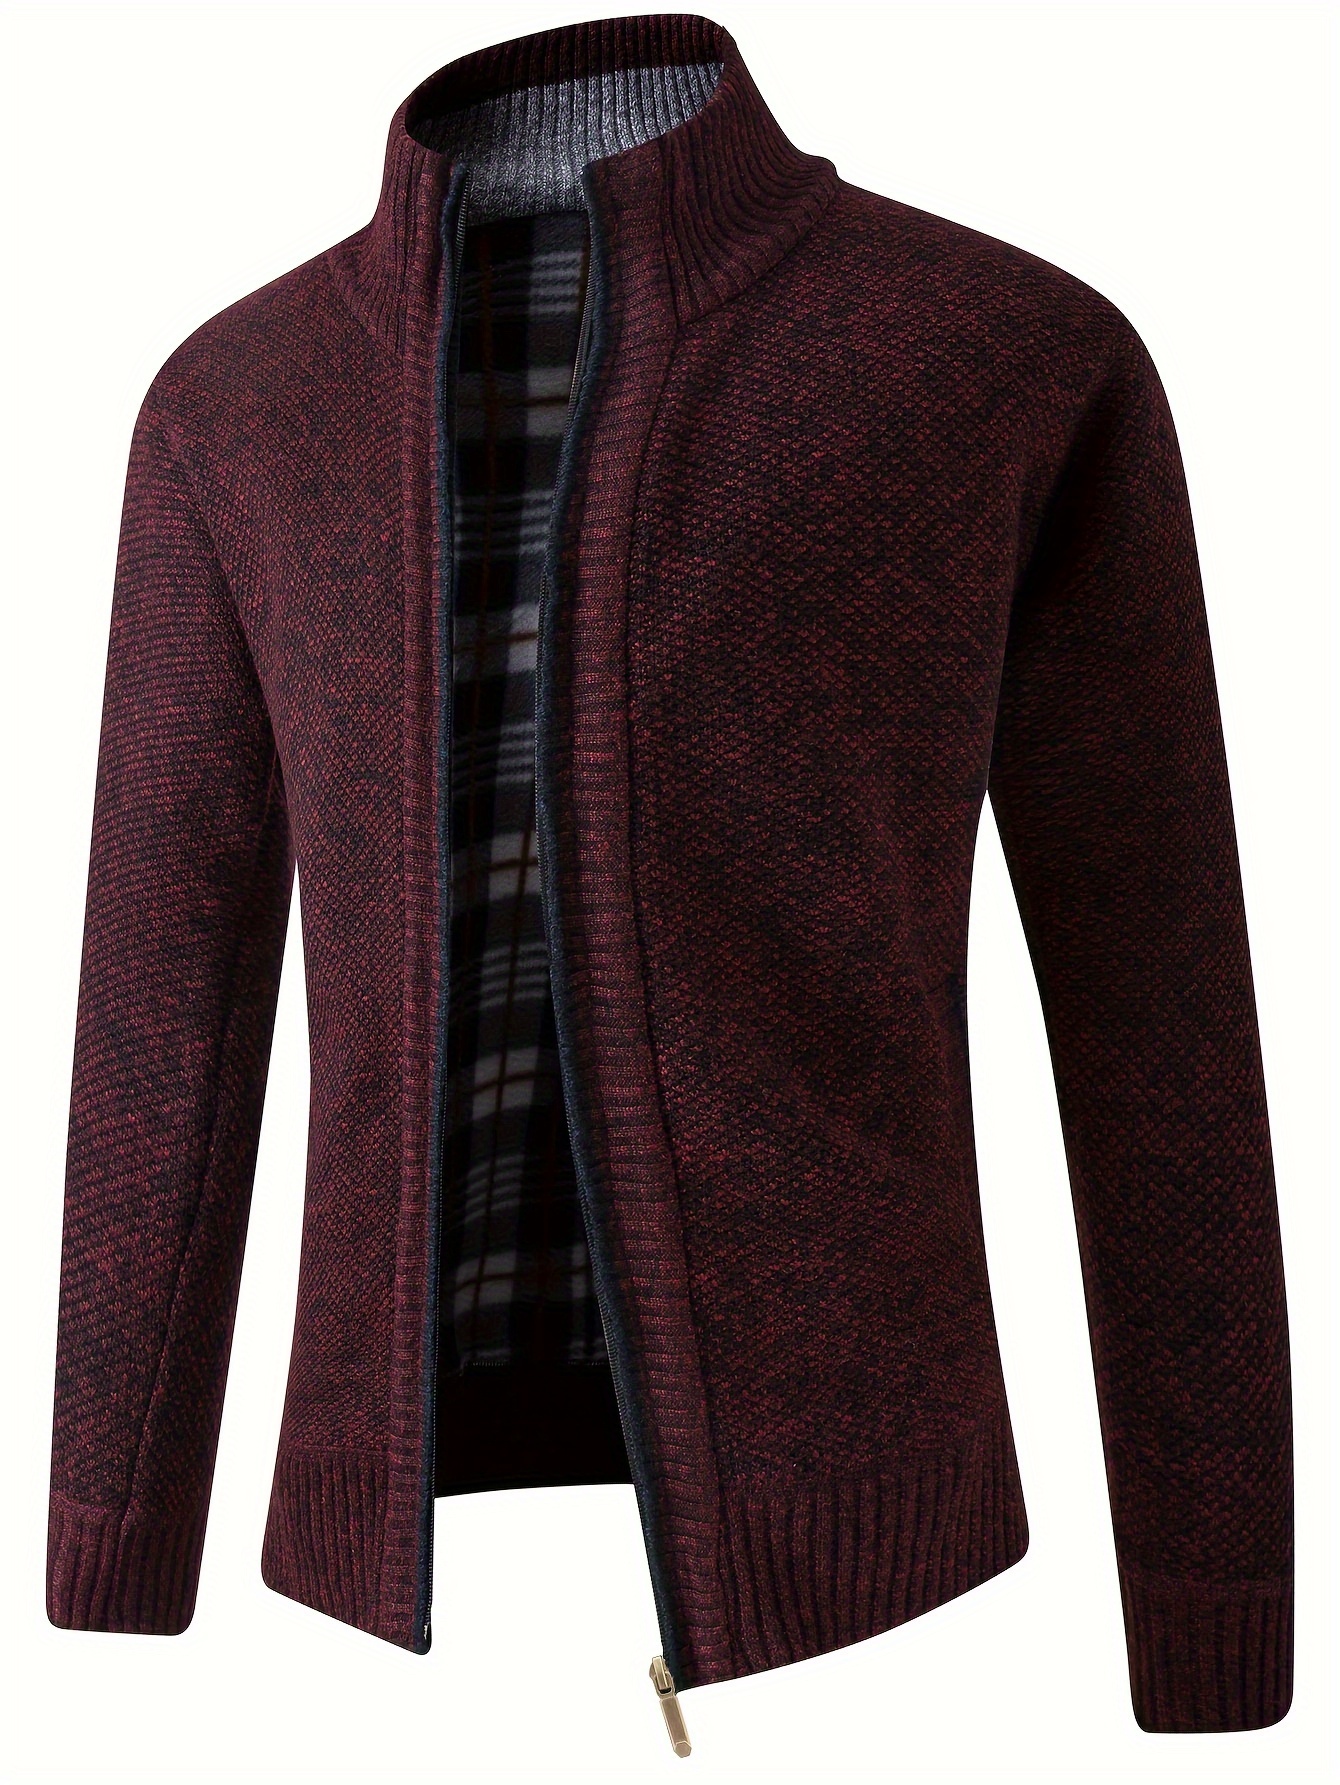 Warm Stand Collar Fleece Jacket, Men's Semi-formal Comfortable